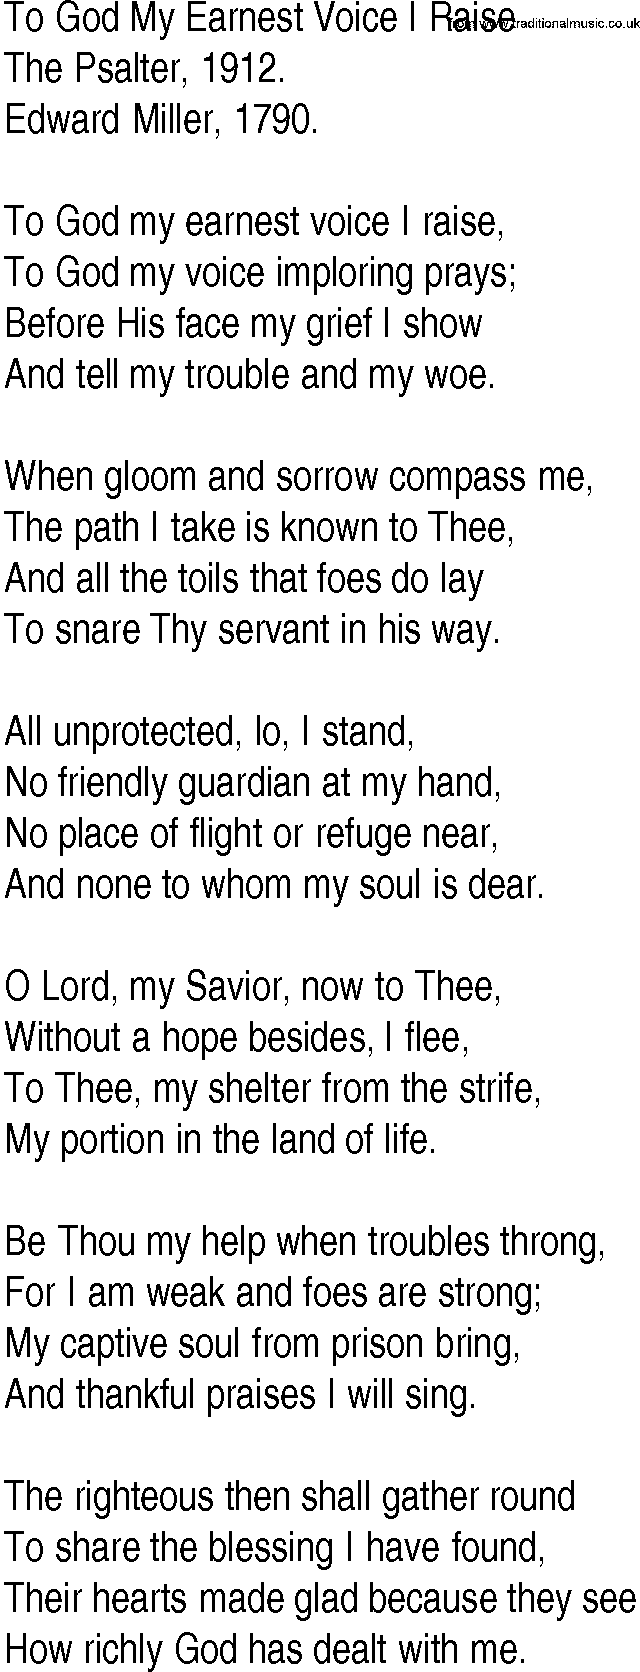 Hymn and Gospel Song: To God My Earnest Voice I Raise by The Psalter lyrics